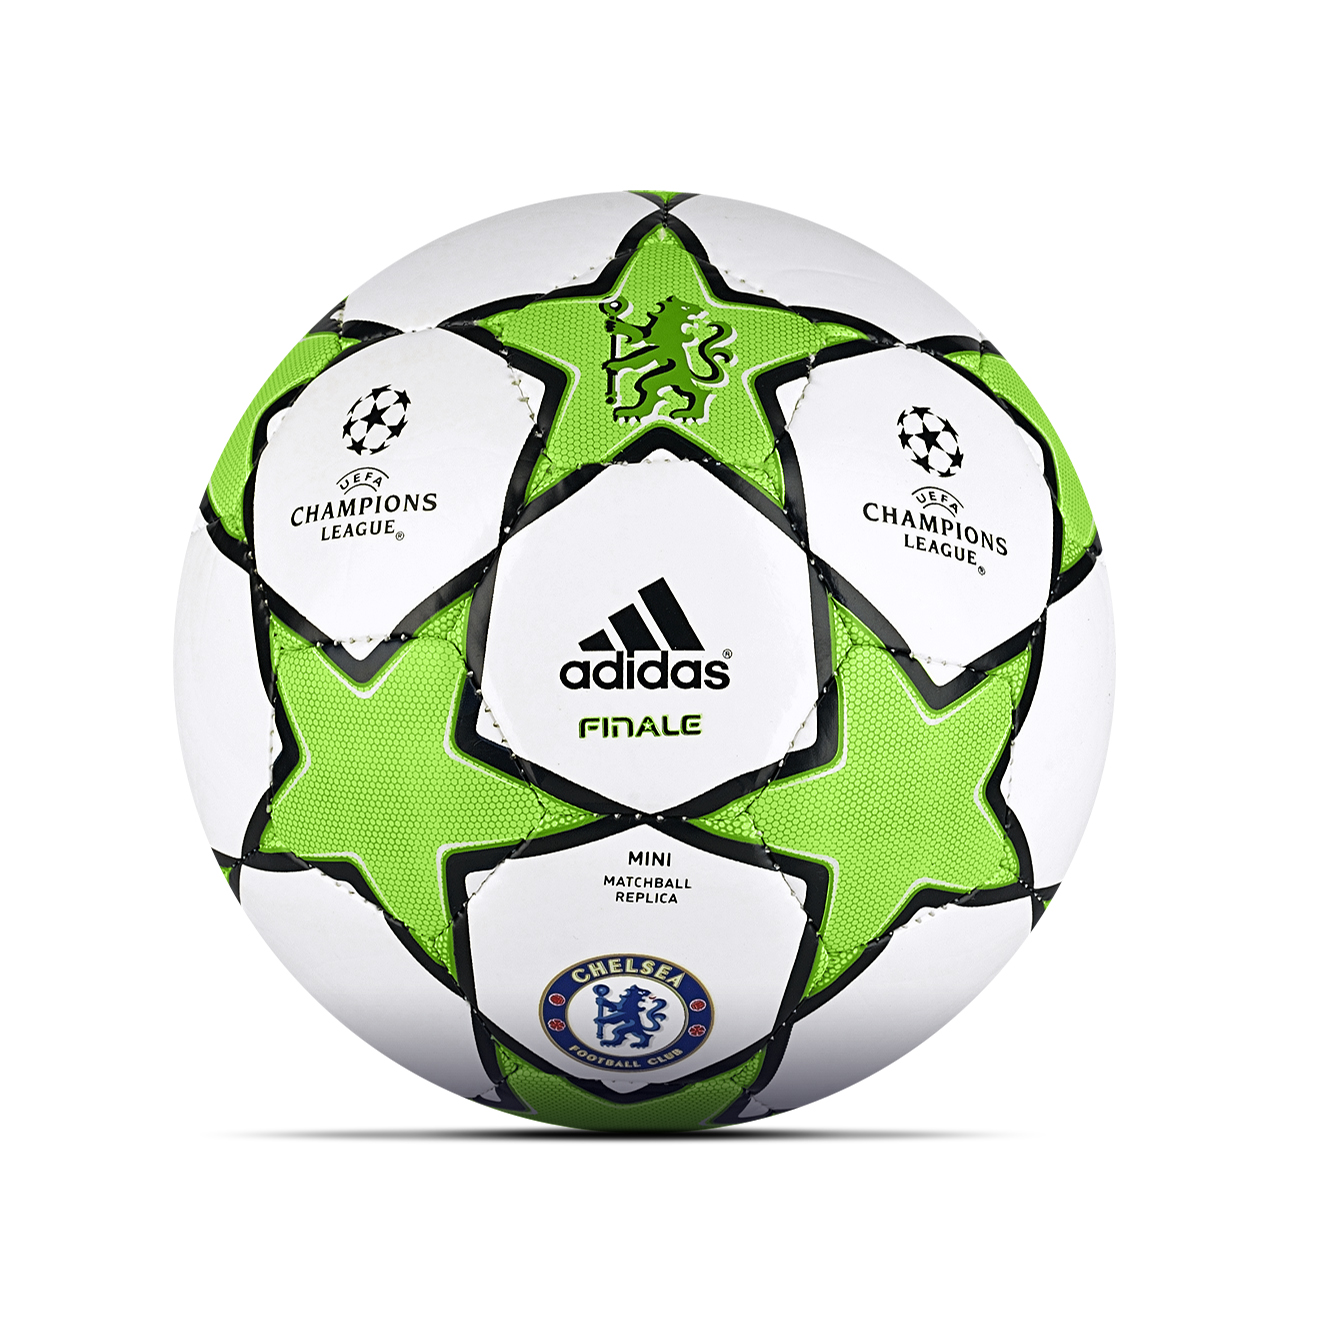 adidas Finale 10 UEFA Champions League Chelsea Miniball Size 1 White